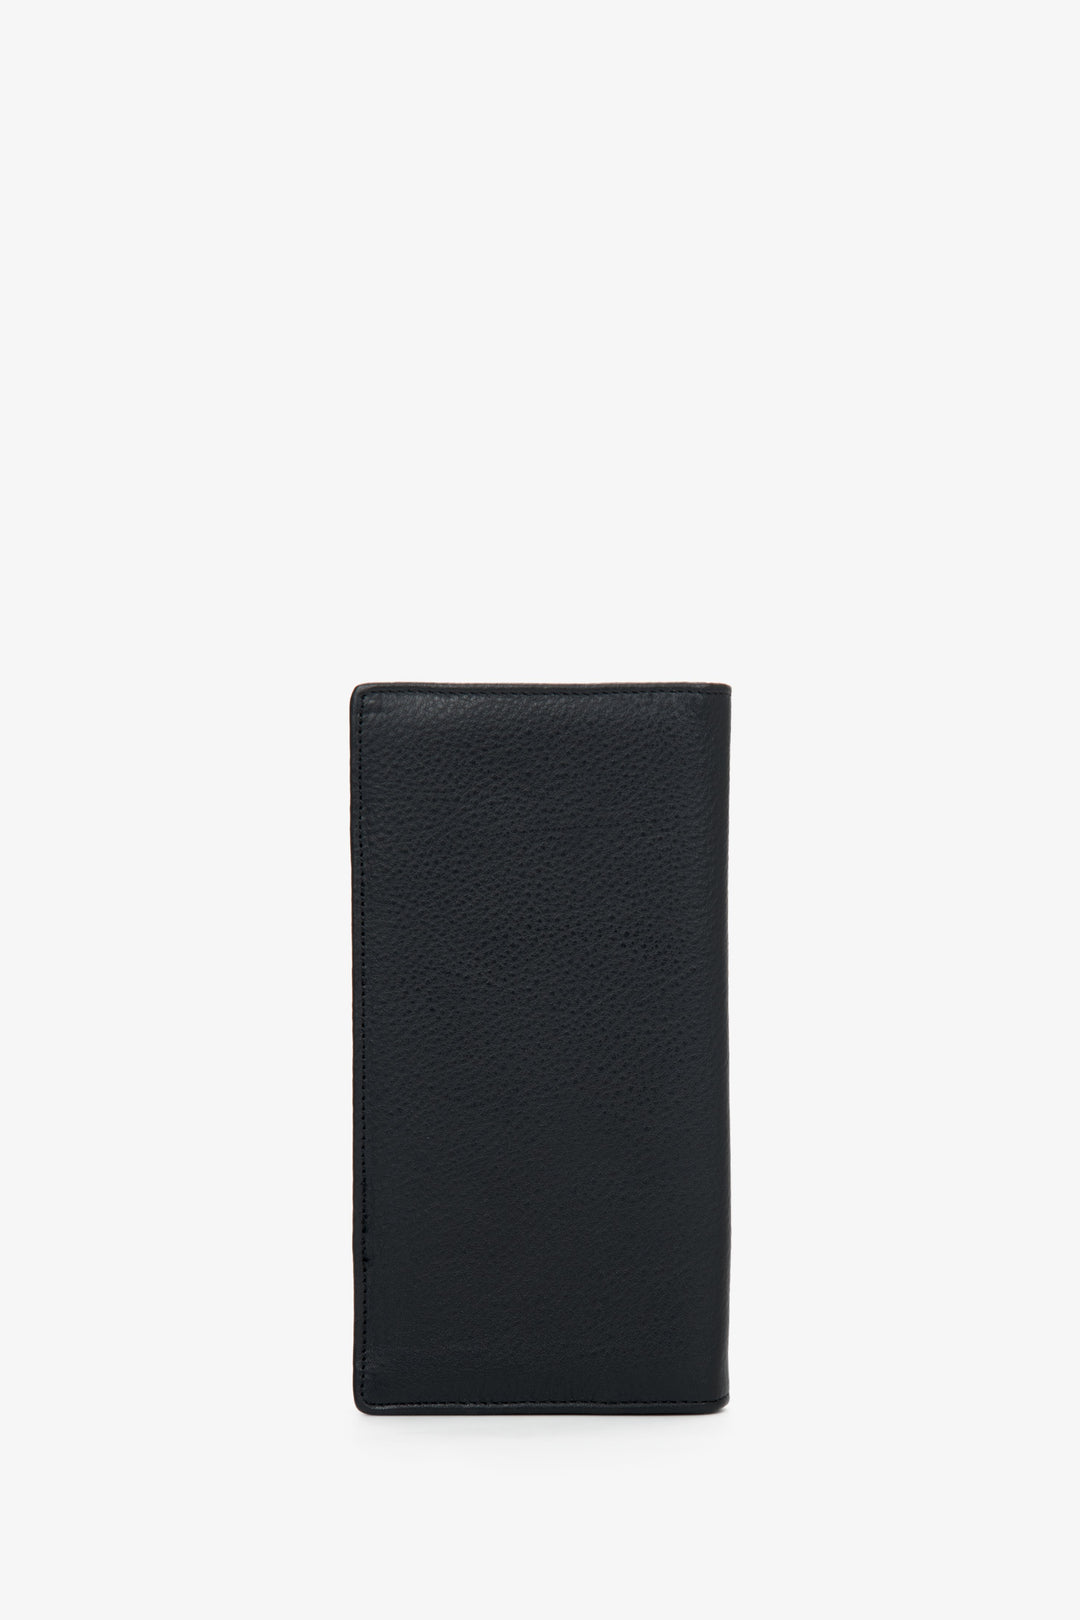 Estro large men's black wallet made of genuine leather.